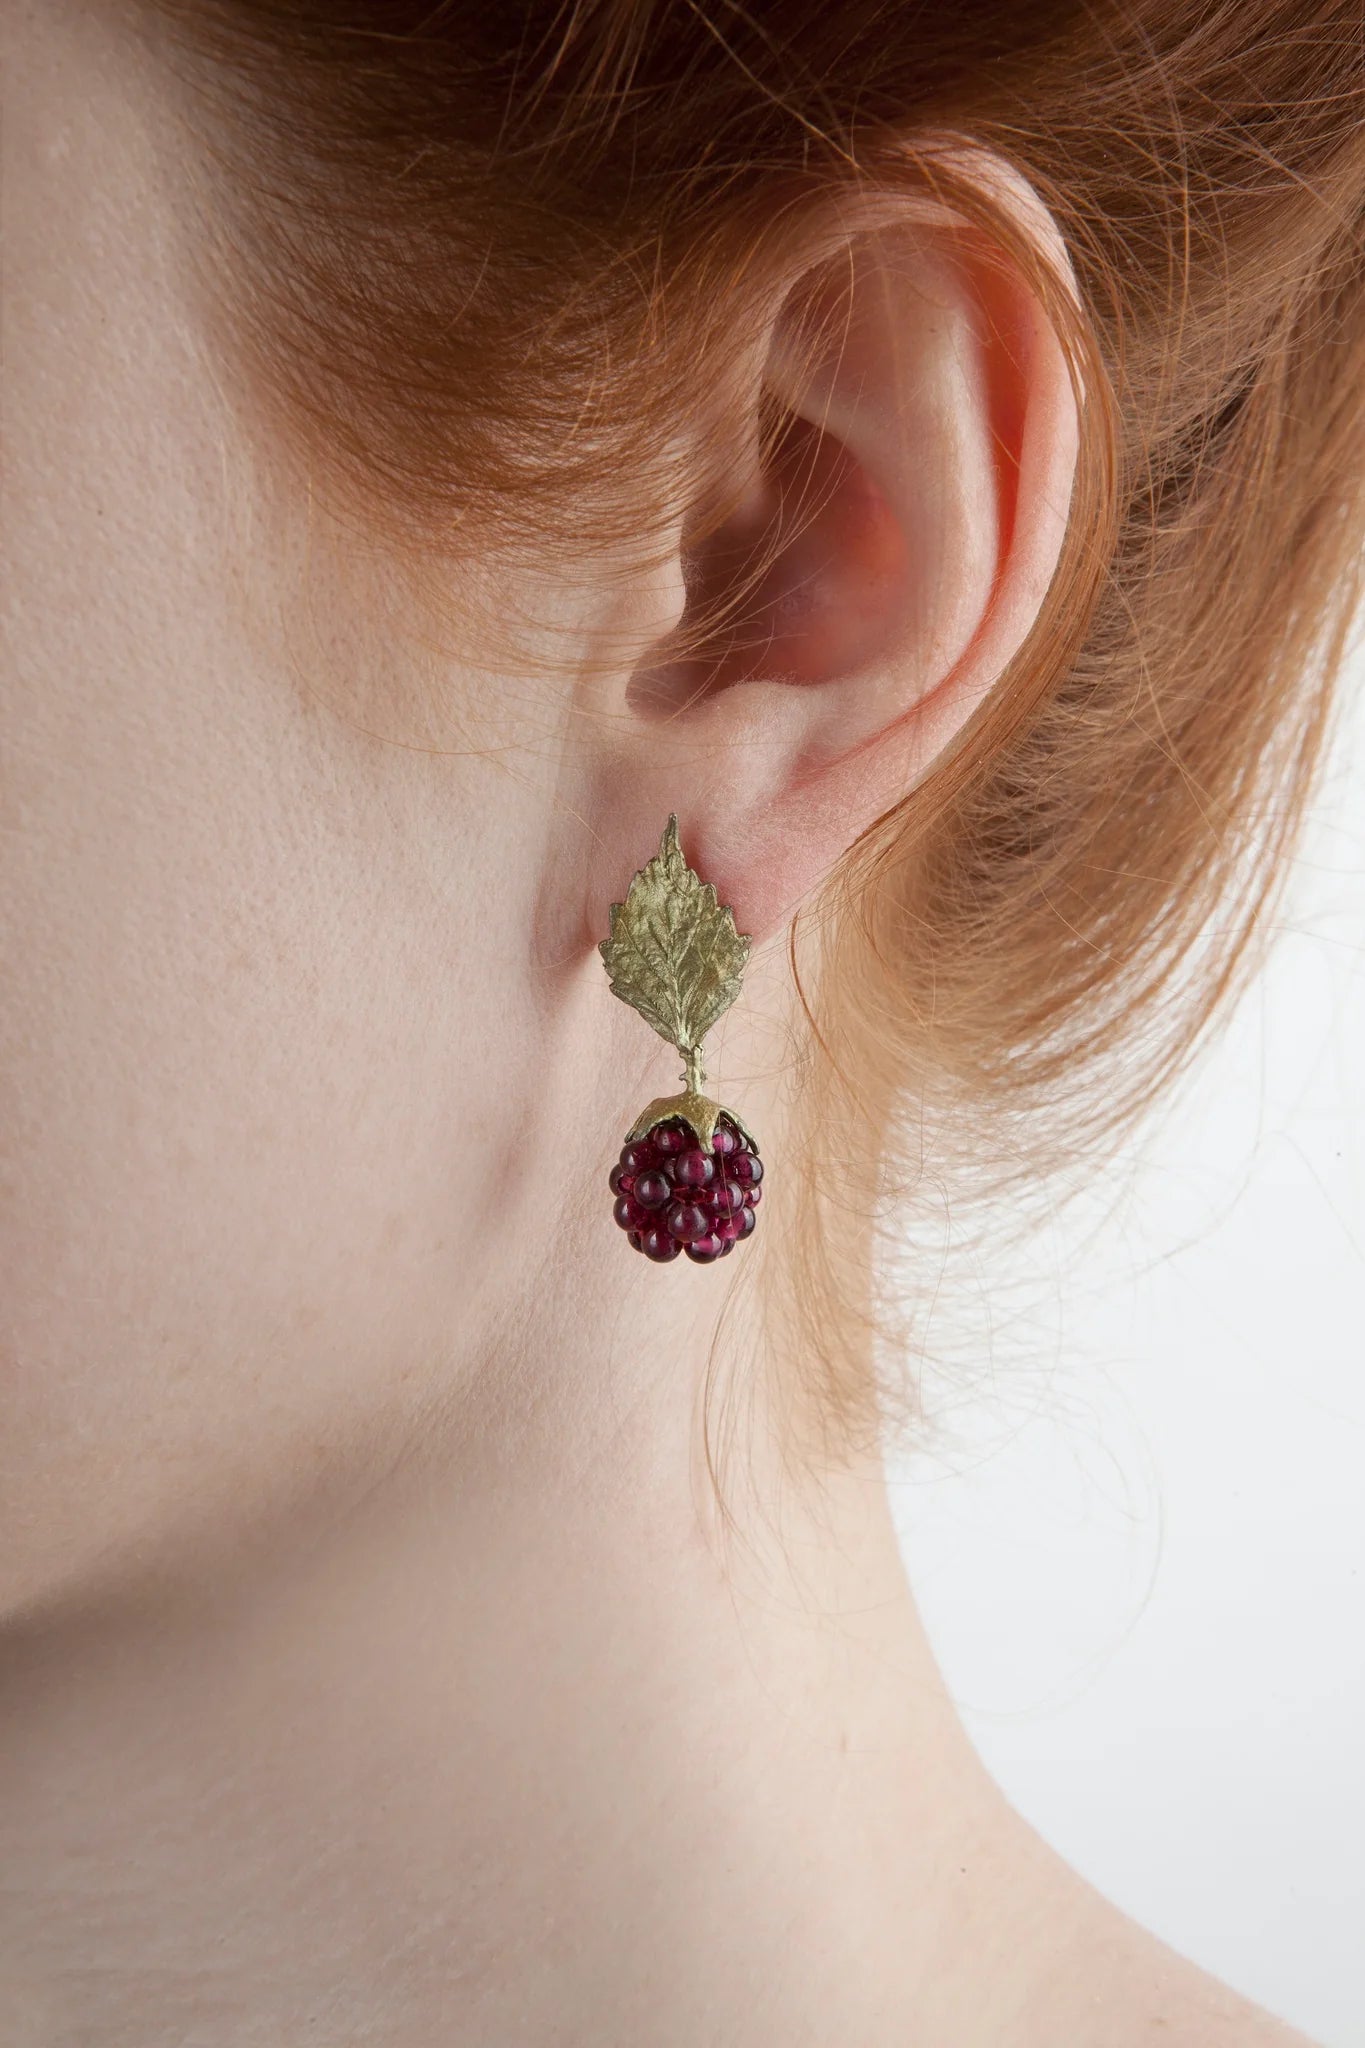 Raspberry Leaf Earrings - The Nancy Smillie Shop - Art, Jewellery & Designer Gifts Glasgow